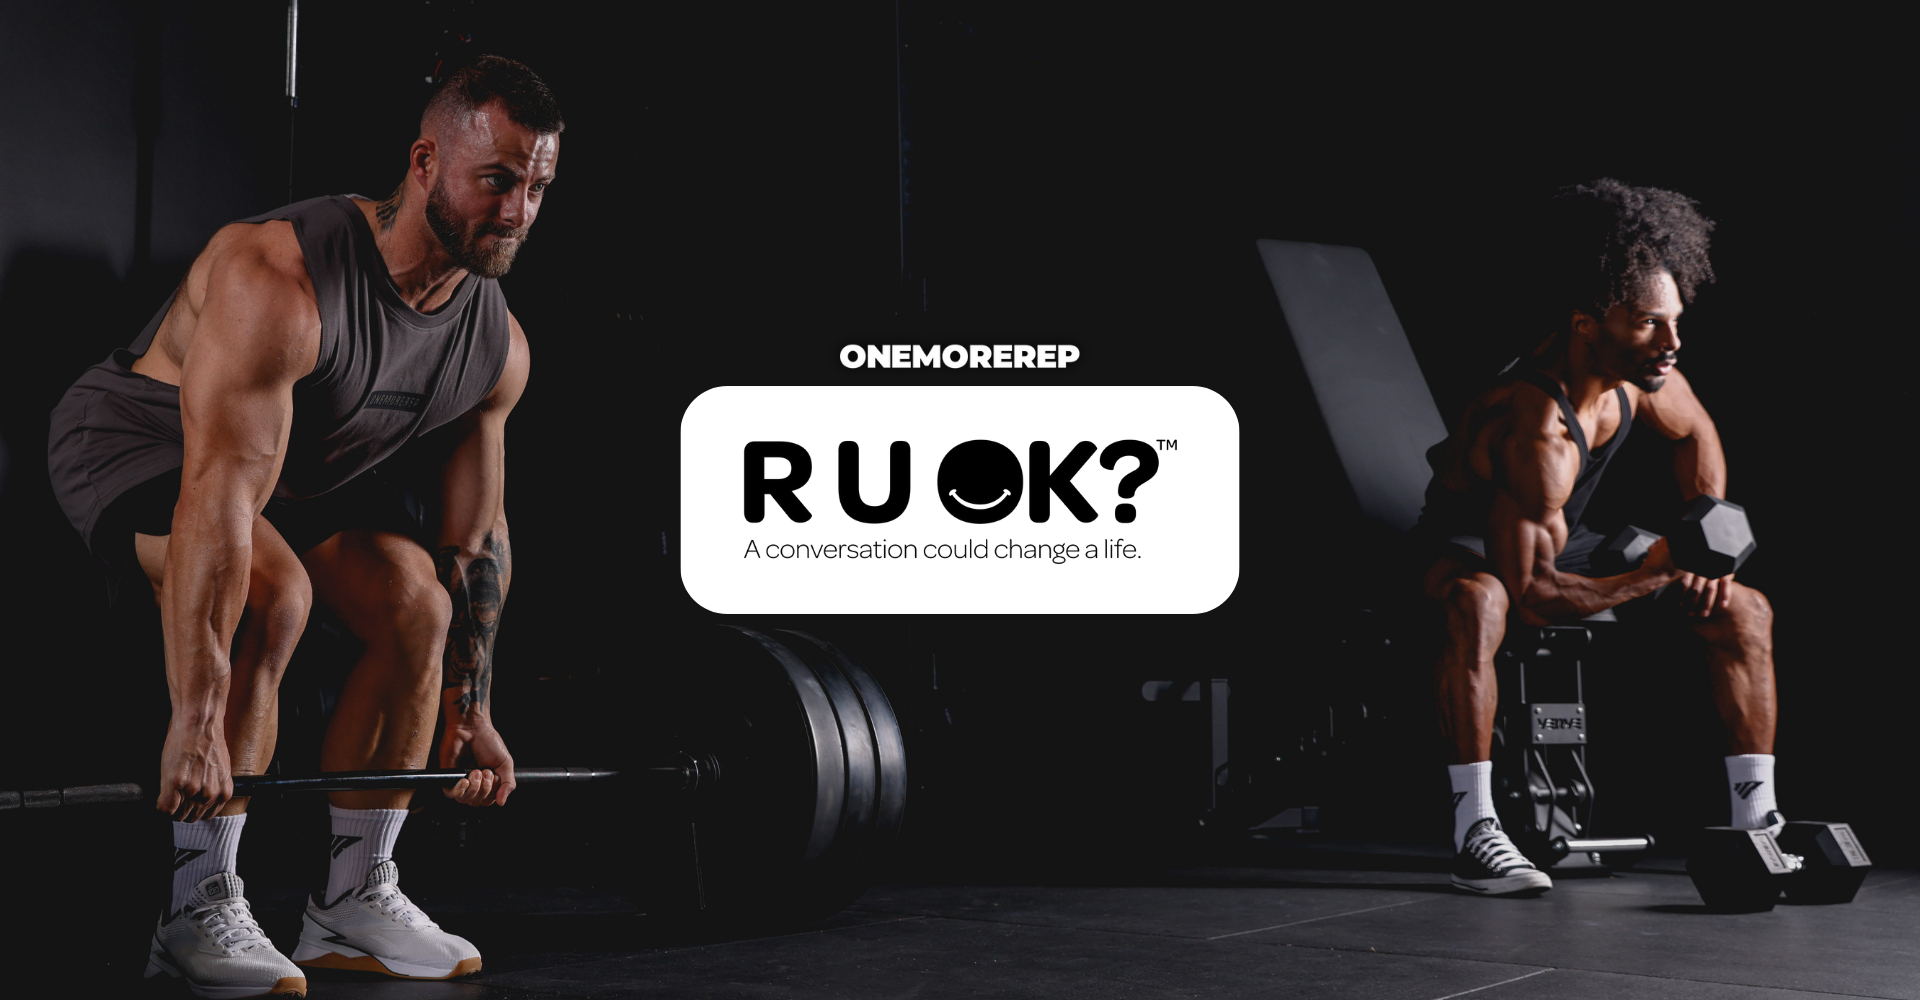 RU OK? A conversation that could change a life.